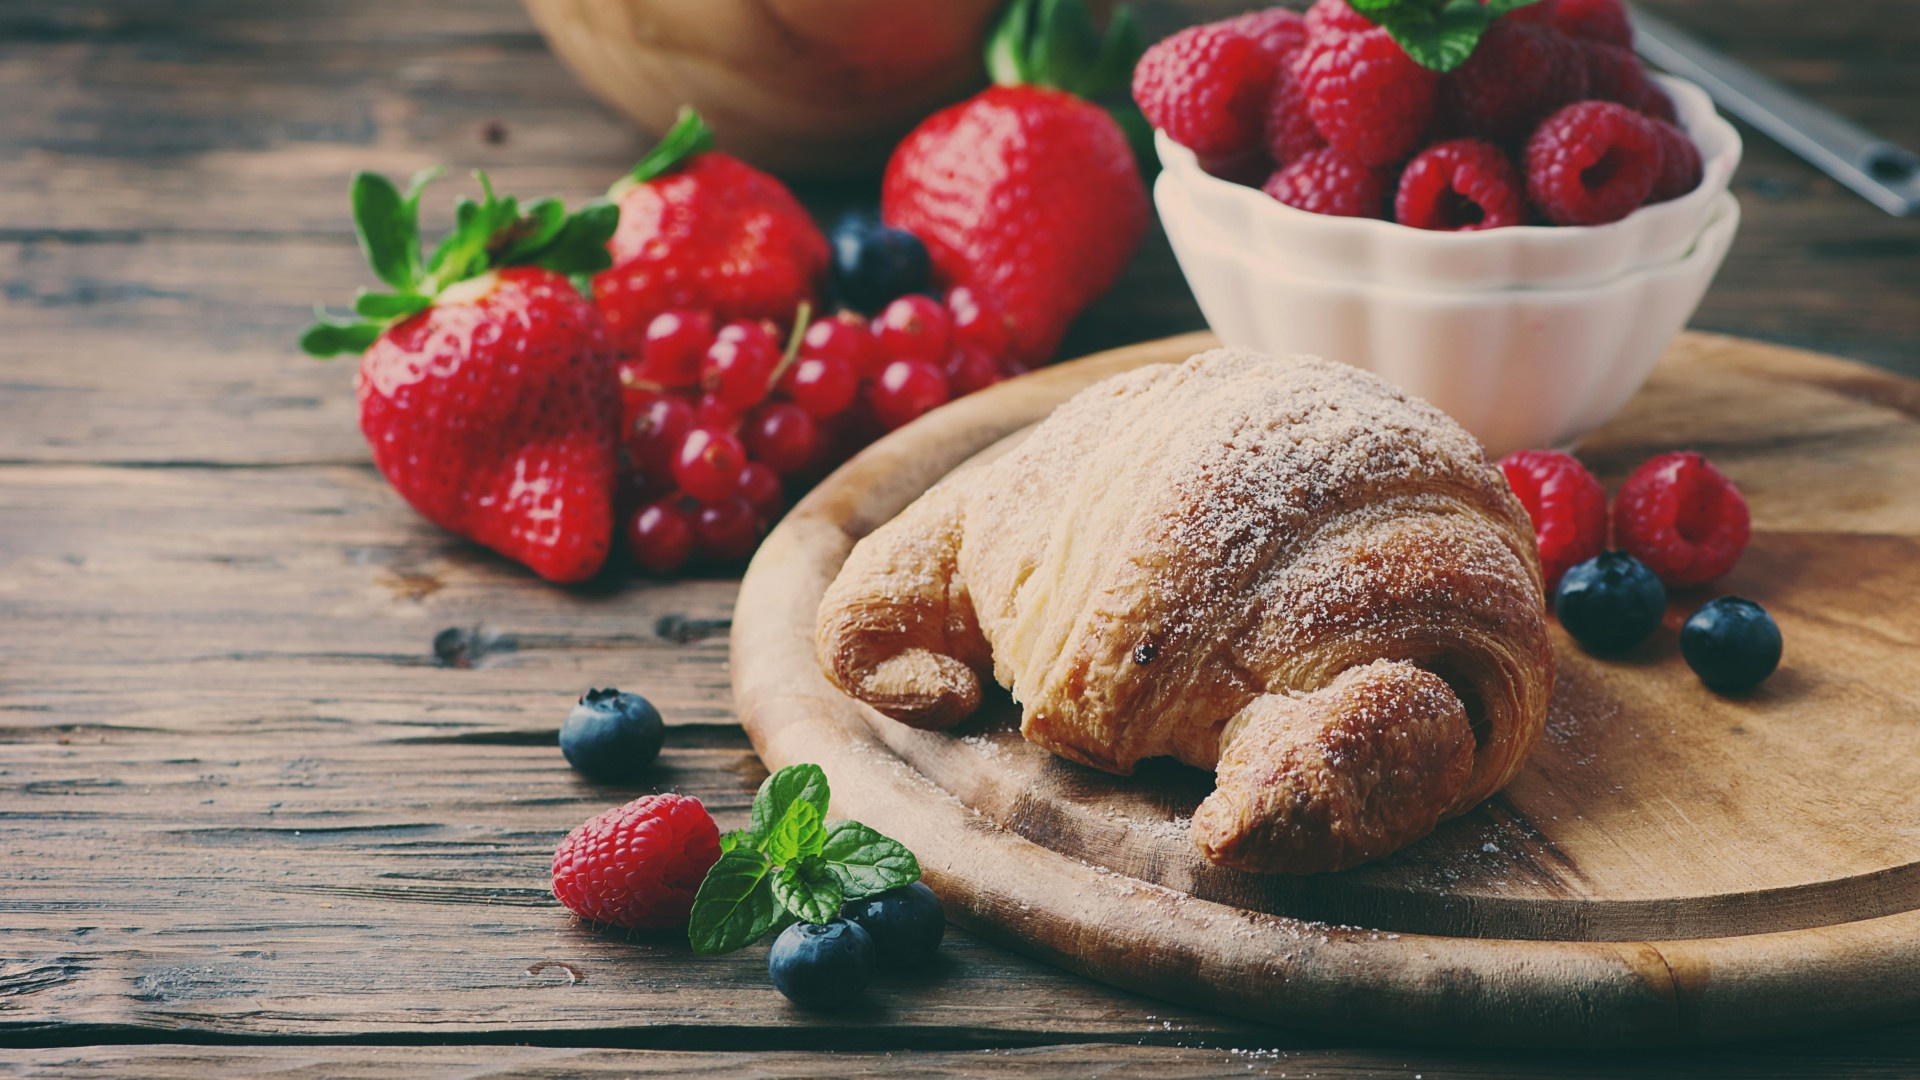 Croissant: Raspberries, Enjoyed as a simple breakfast pastry. 1920x1080 Full HD Wallpaper.